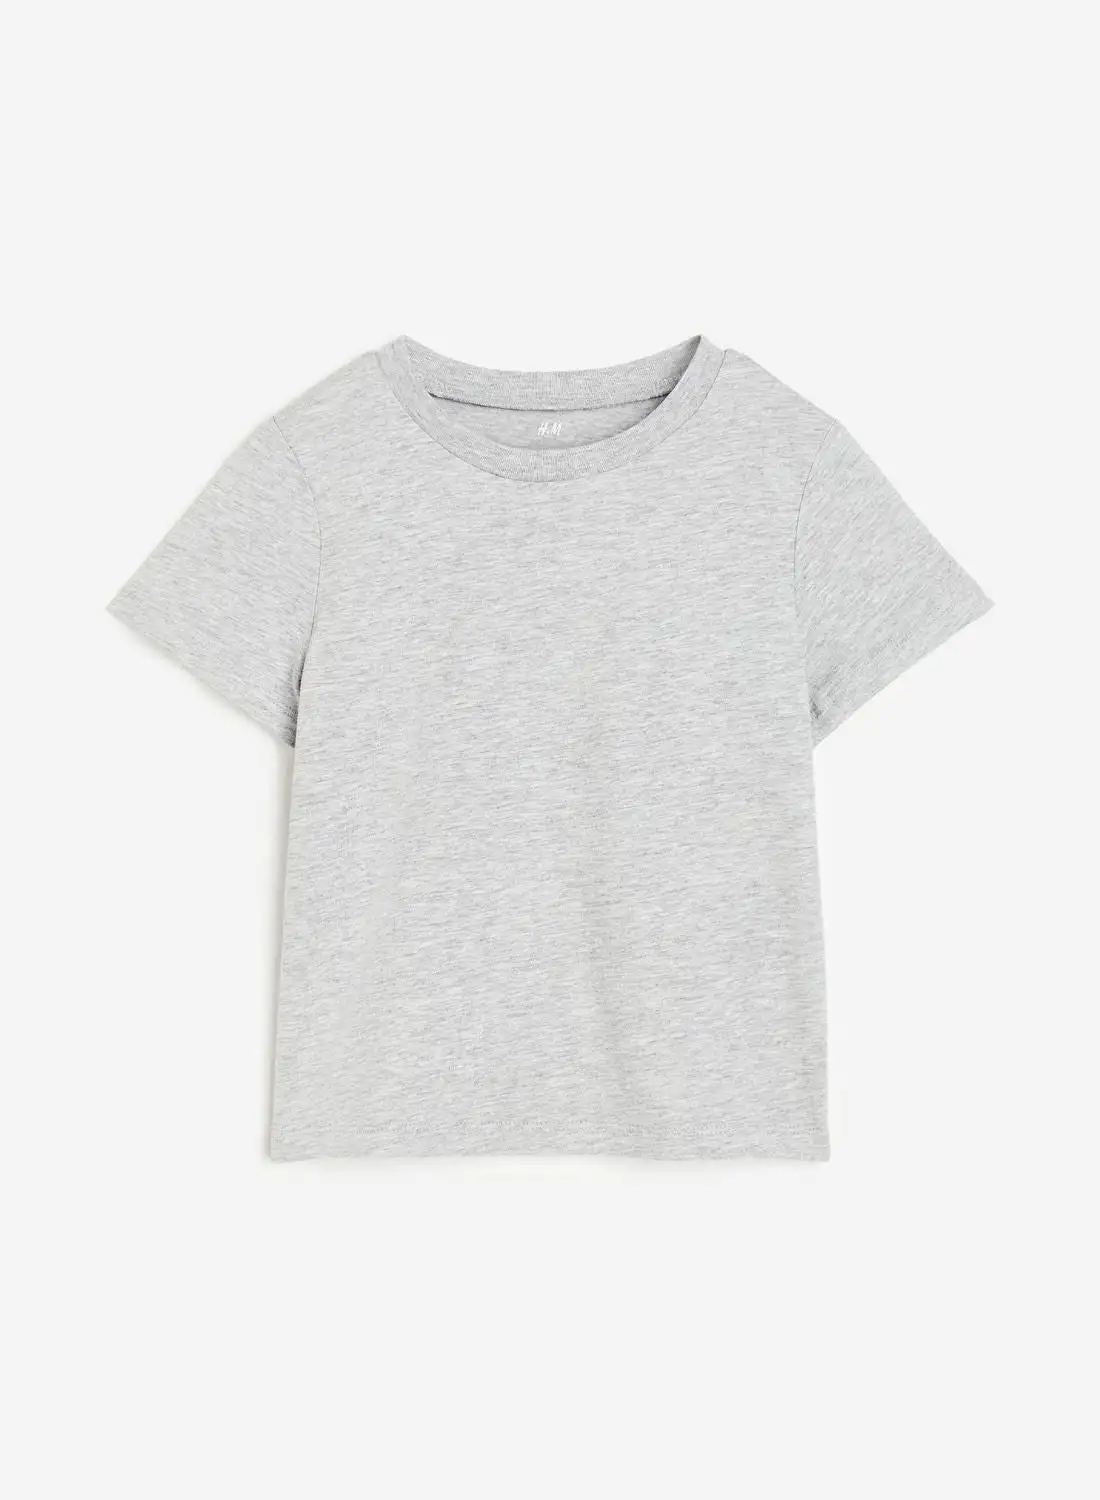 H&M Kids Cotton T-Shirt